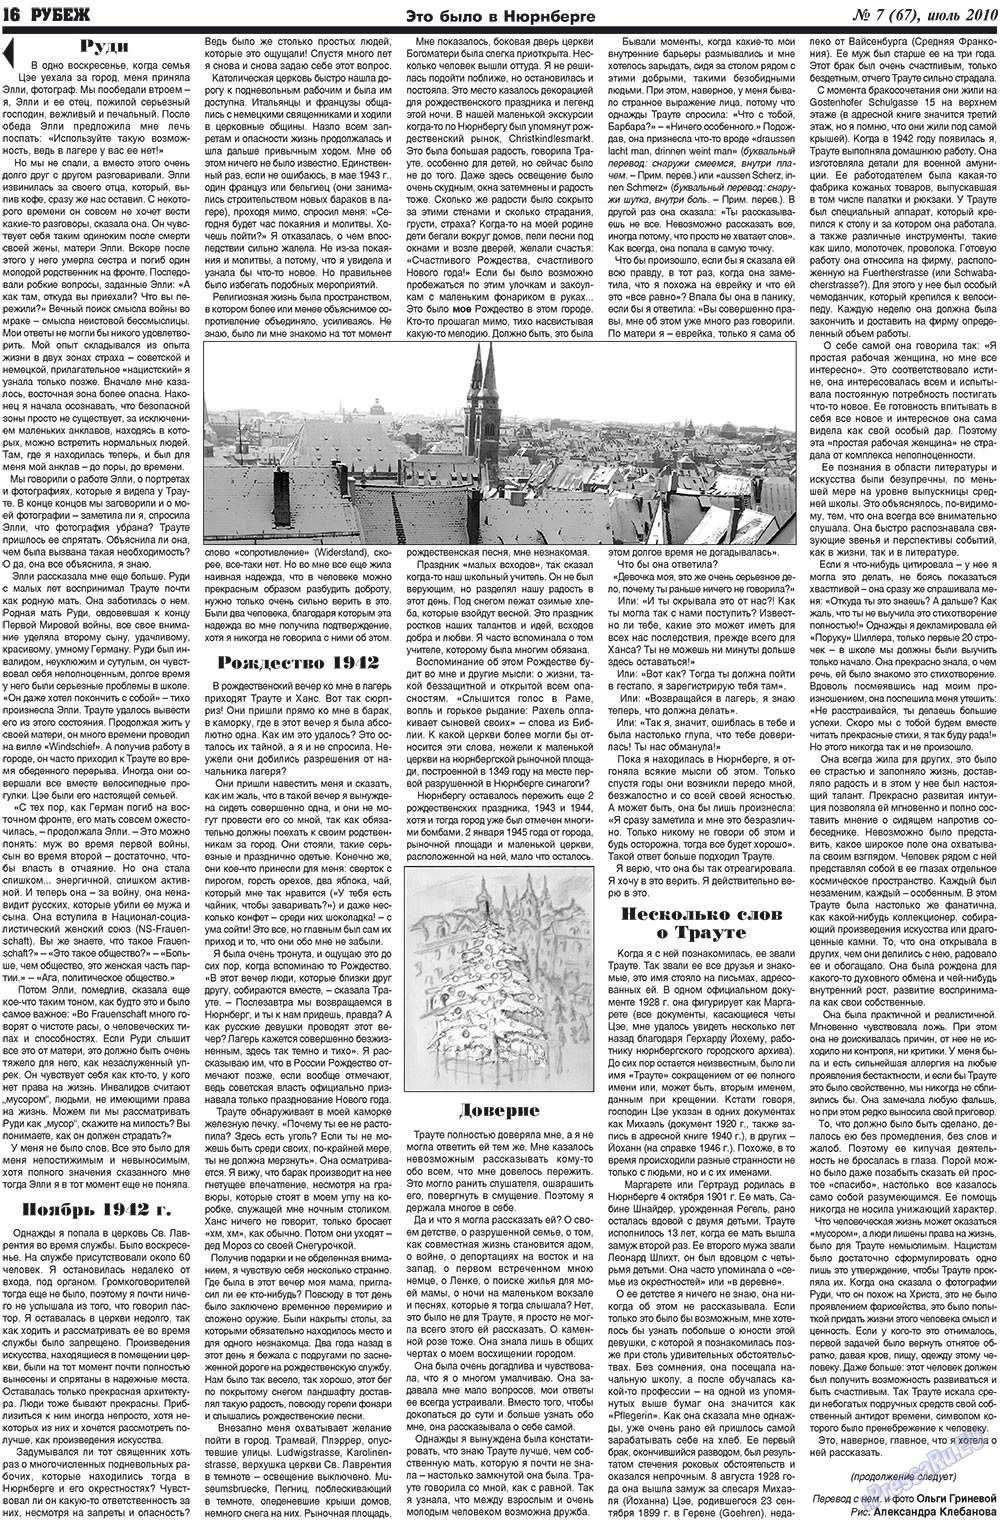 Рубеж, газета. 2010 №7 стр.16